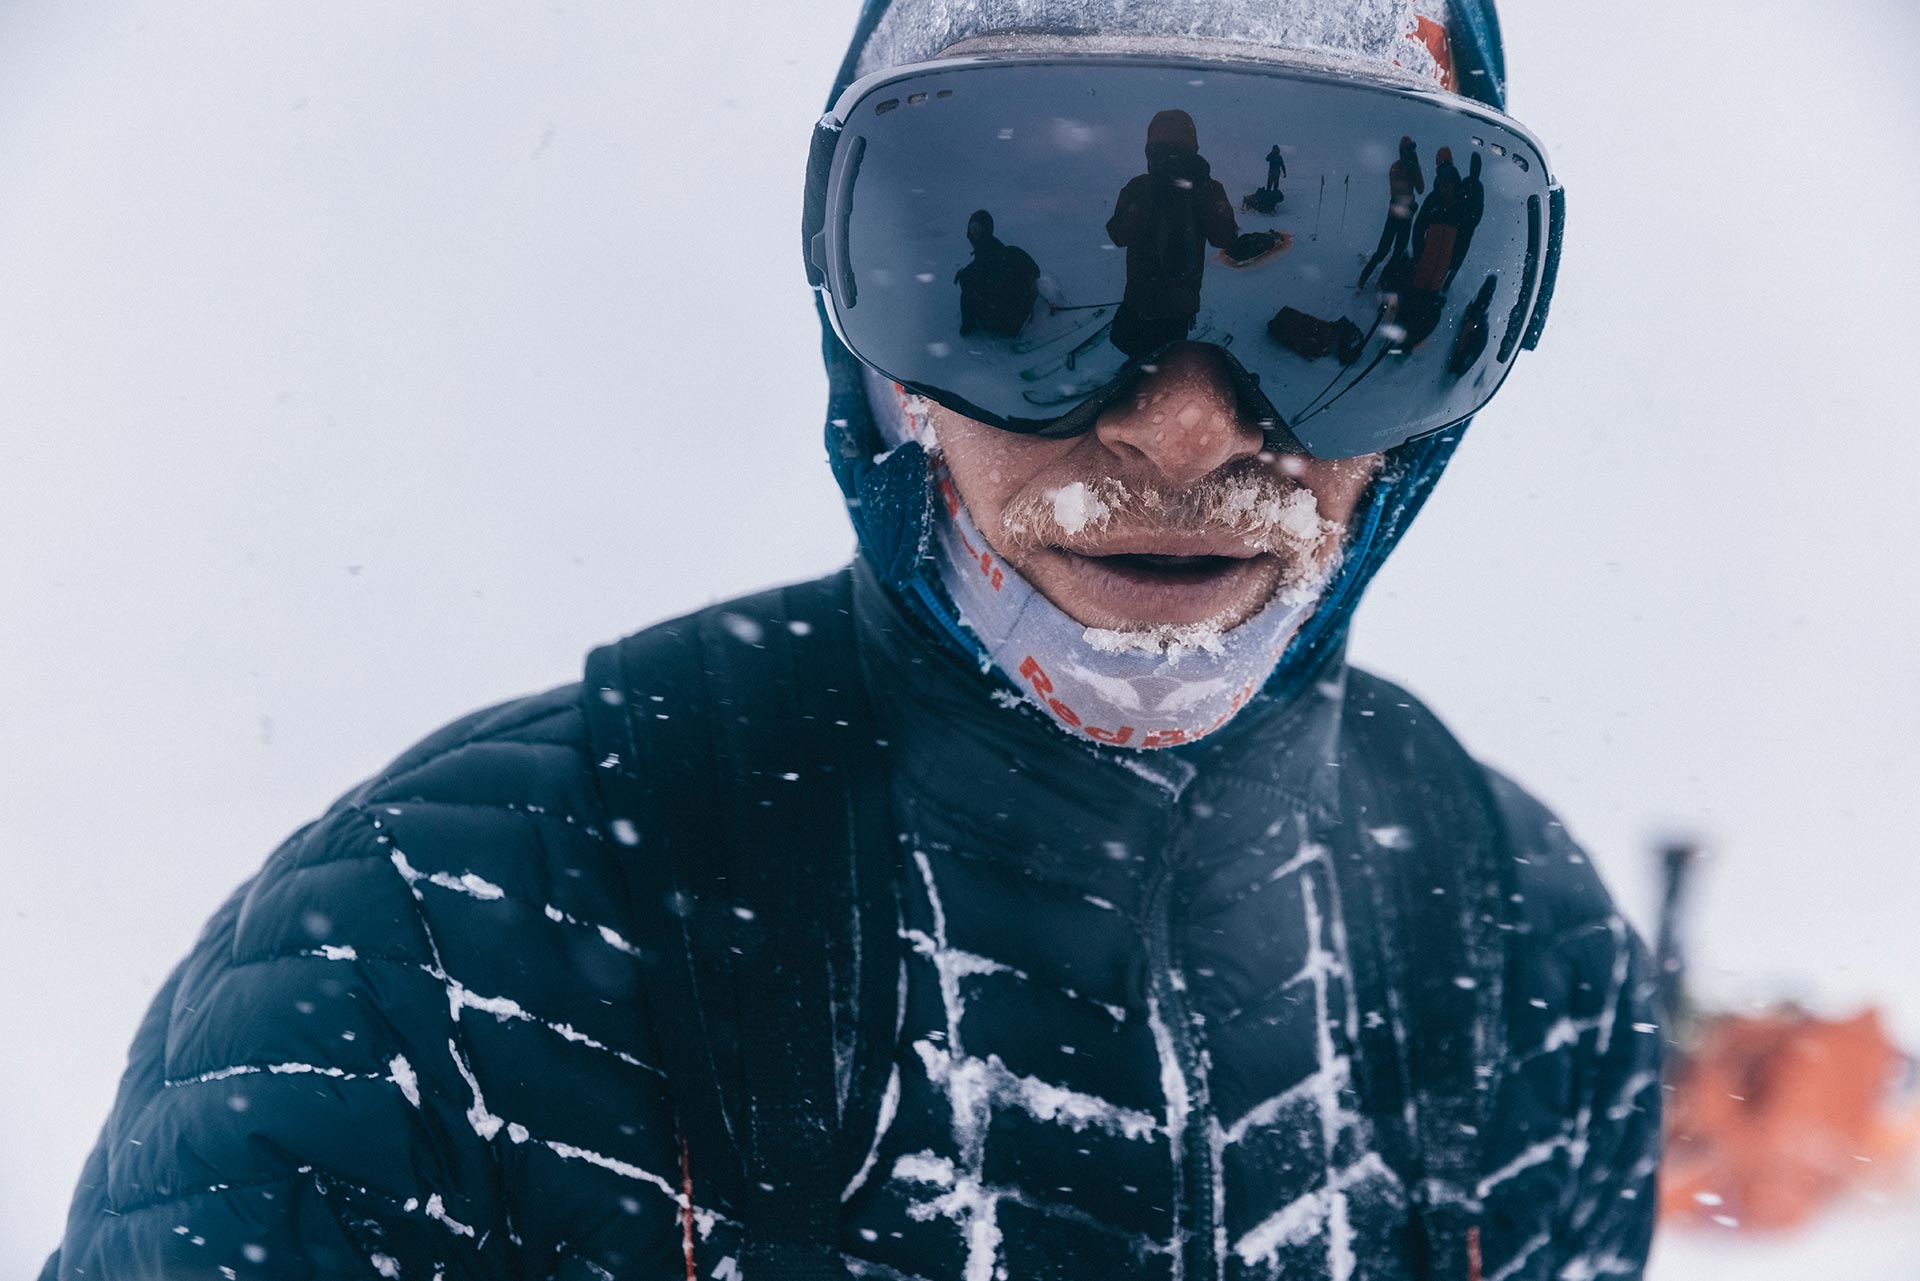 Extreme skier Jérémie Heitz tackles death-defying Alpine bucket